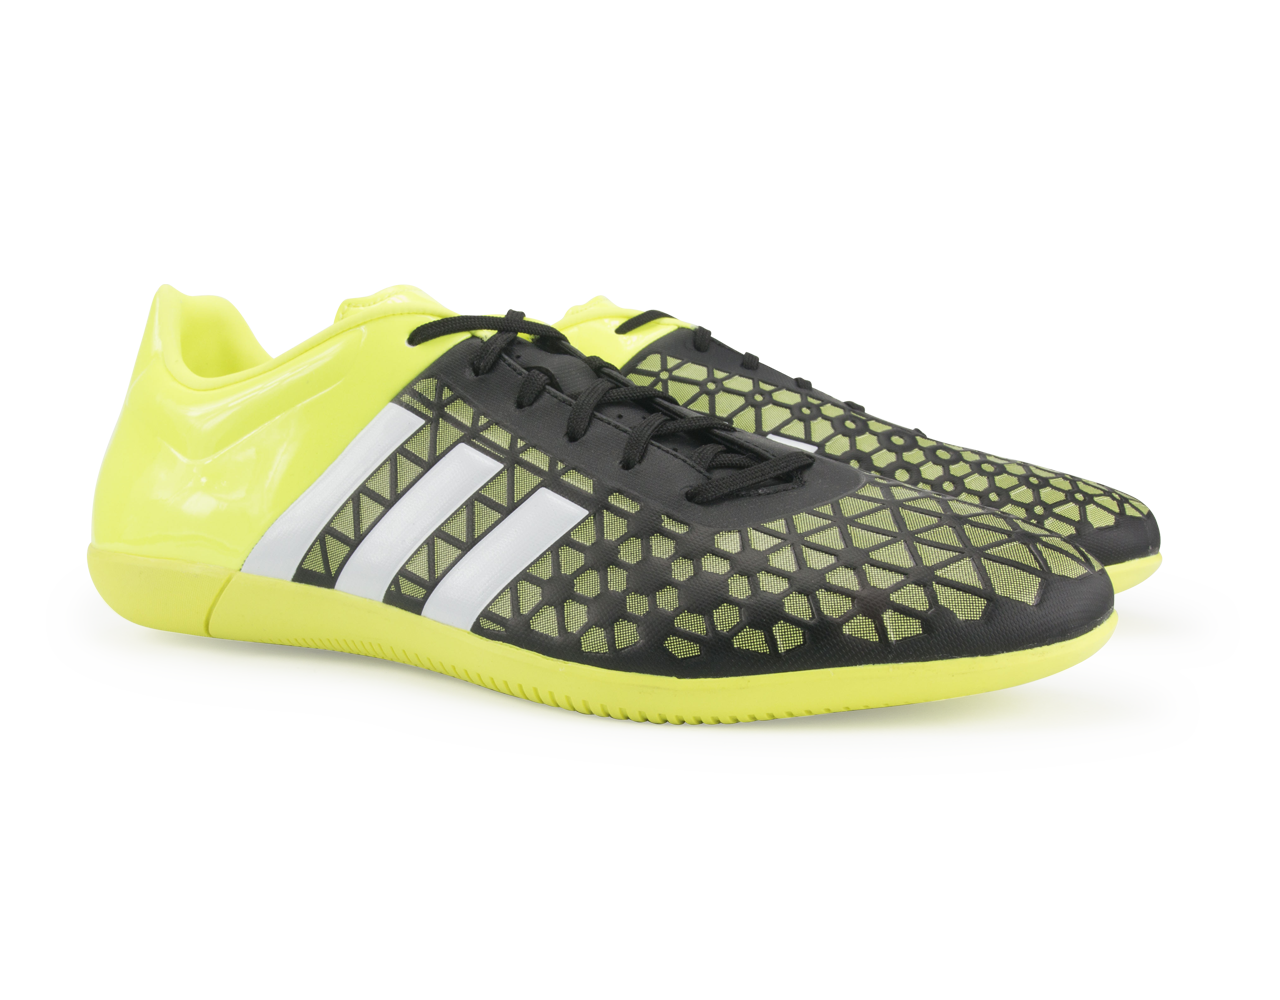 adidas Men's ACE 15.3 Indoor Soccer Shoes Solar Yellow/Solar Yellow/Black